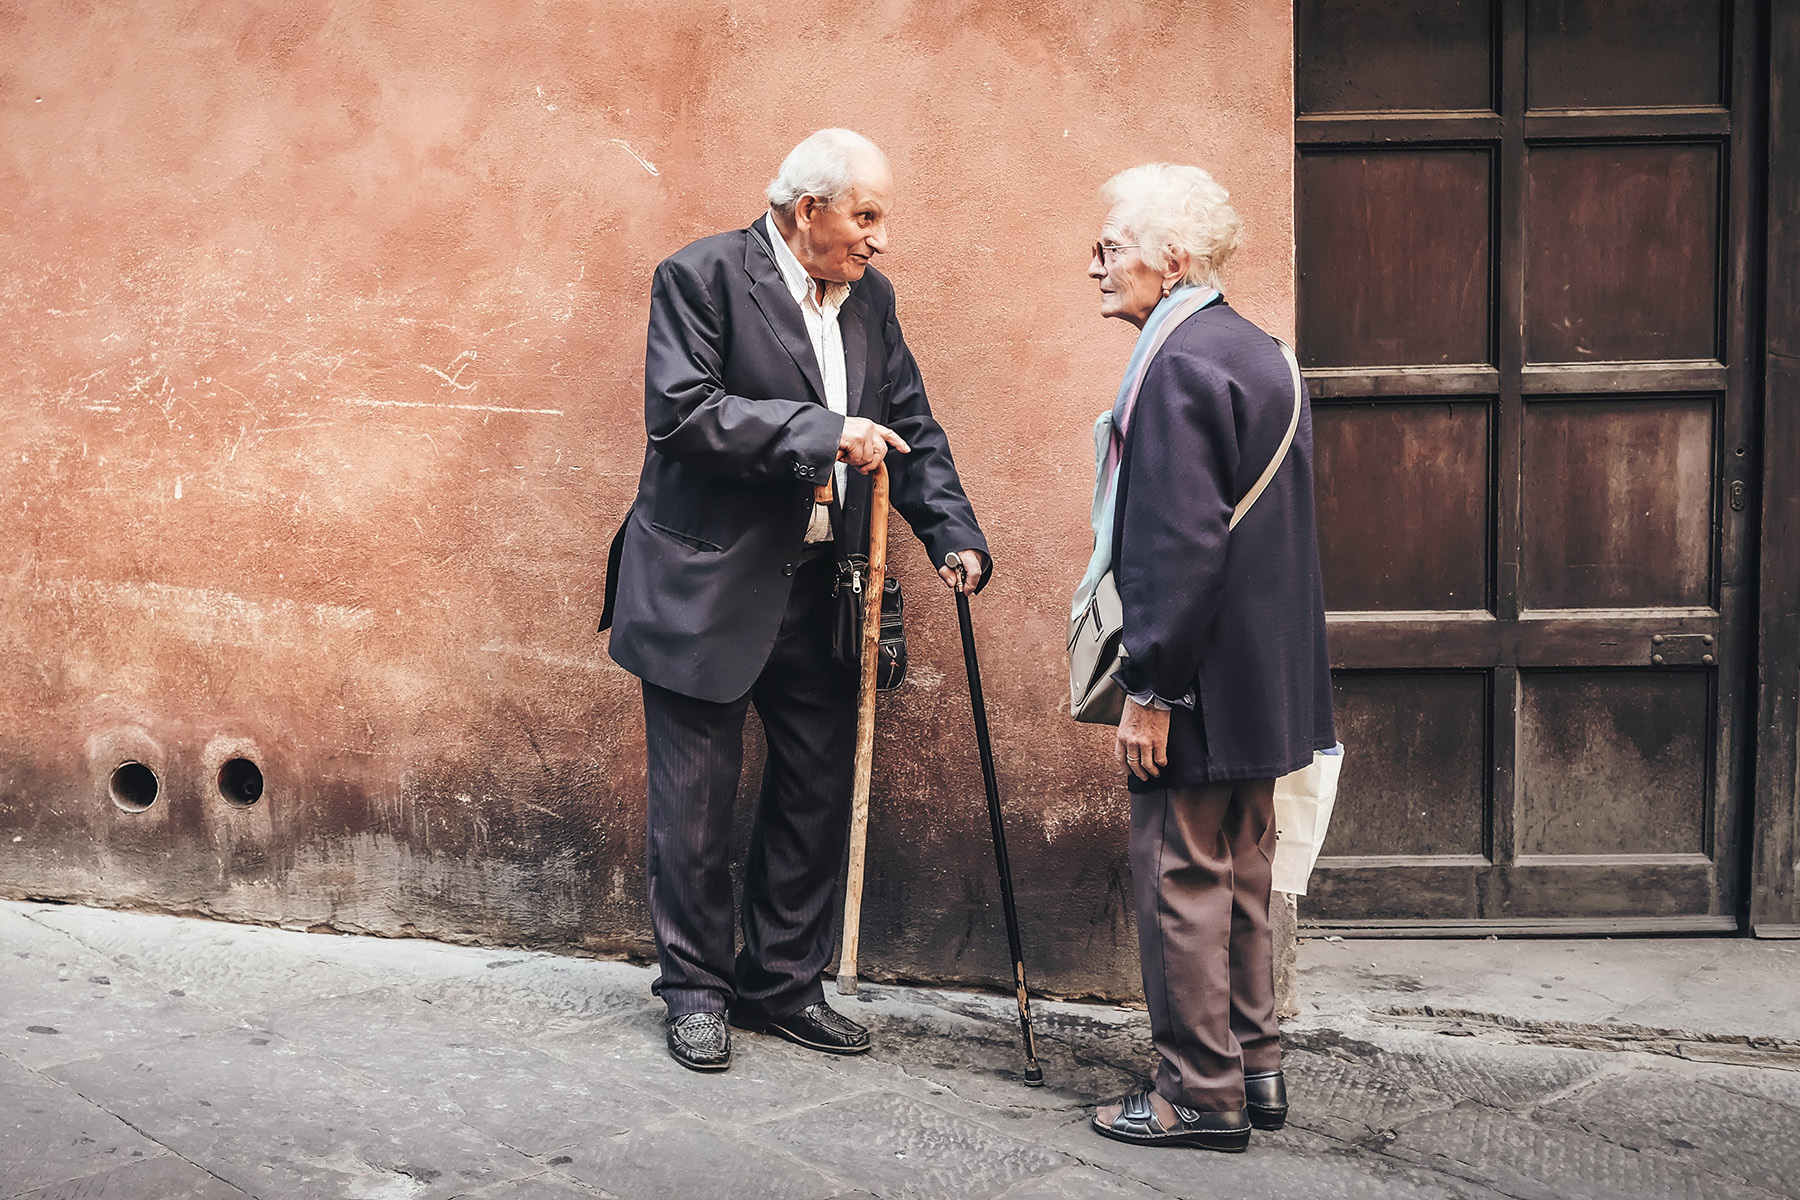 Two seniors talking on the street